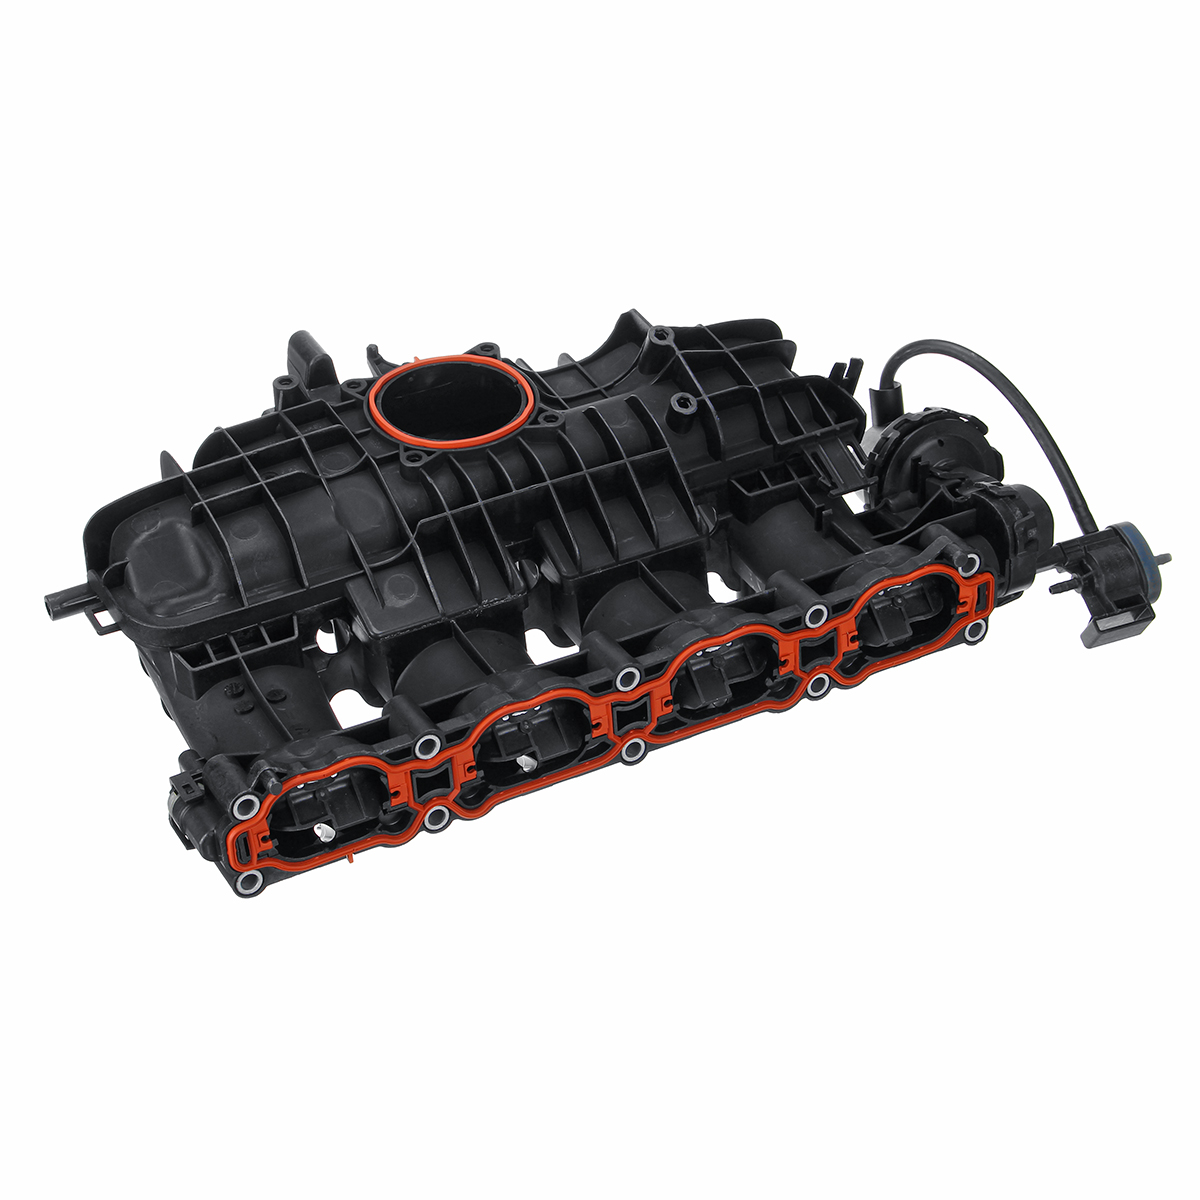 

Engine Intake Manifold with Sealing Gasket For VW Beetle Jetta Passat 2.0 1.8 L 2014-2016